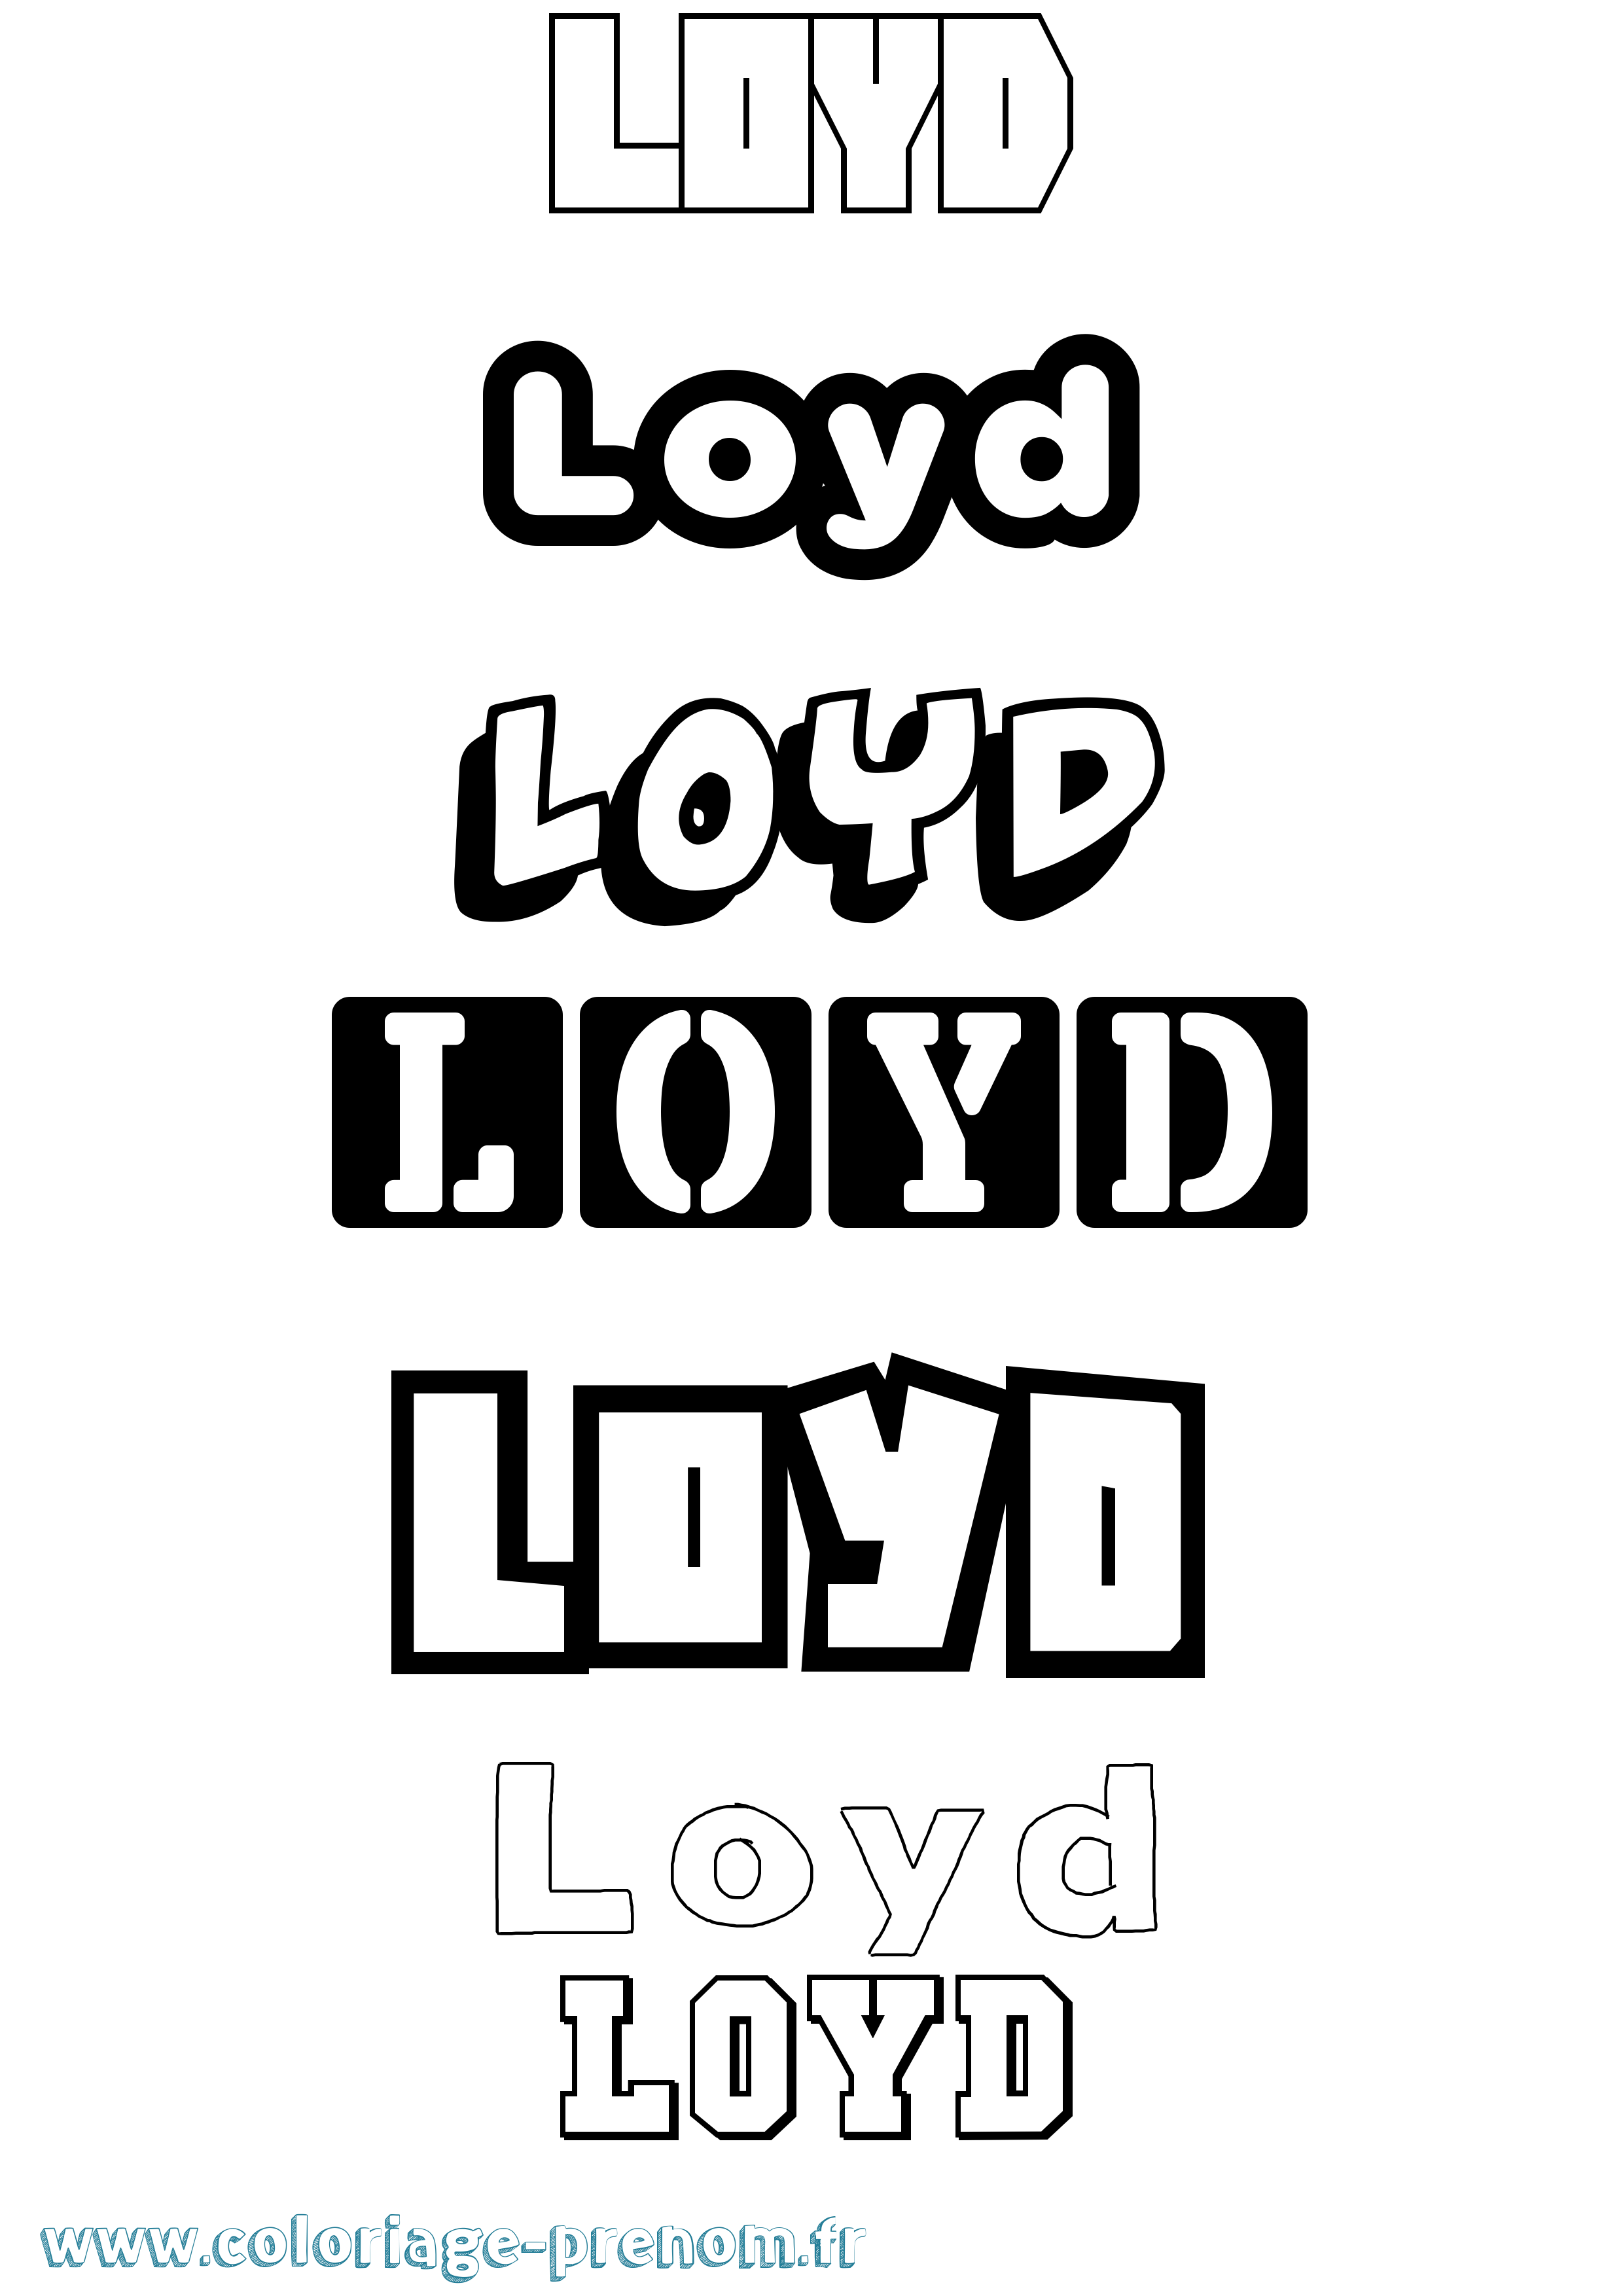 Coloriage prénom Loyd Simple